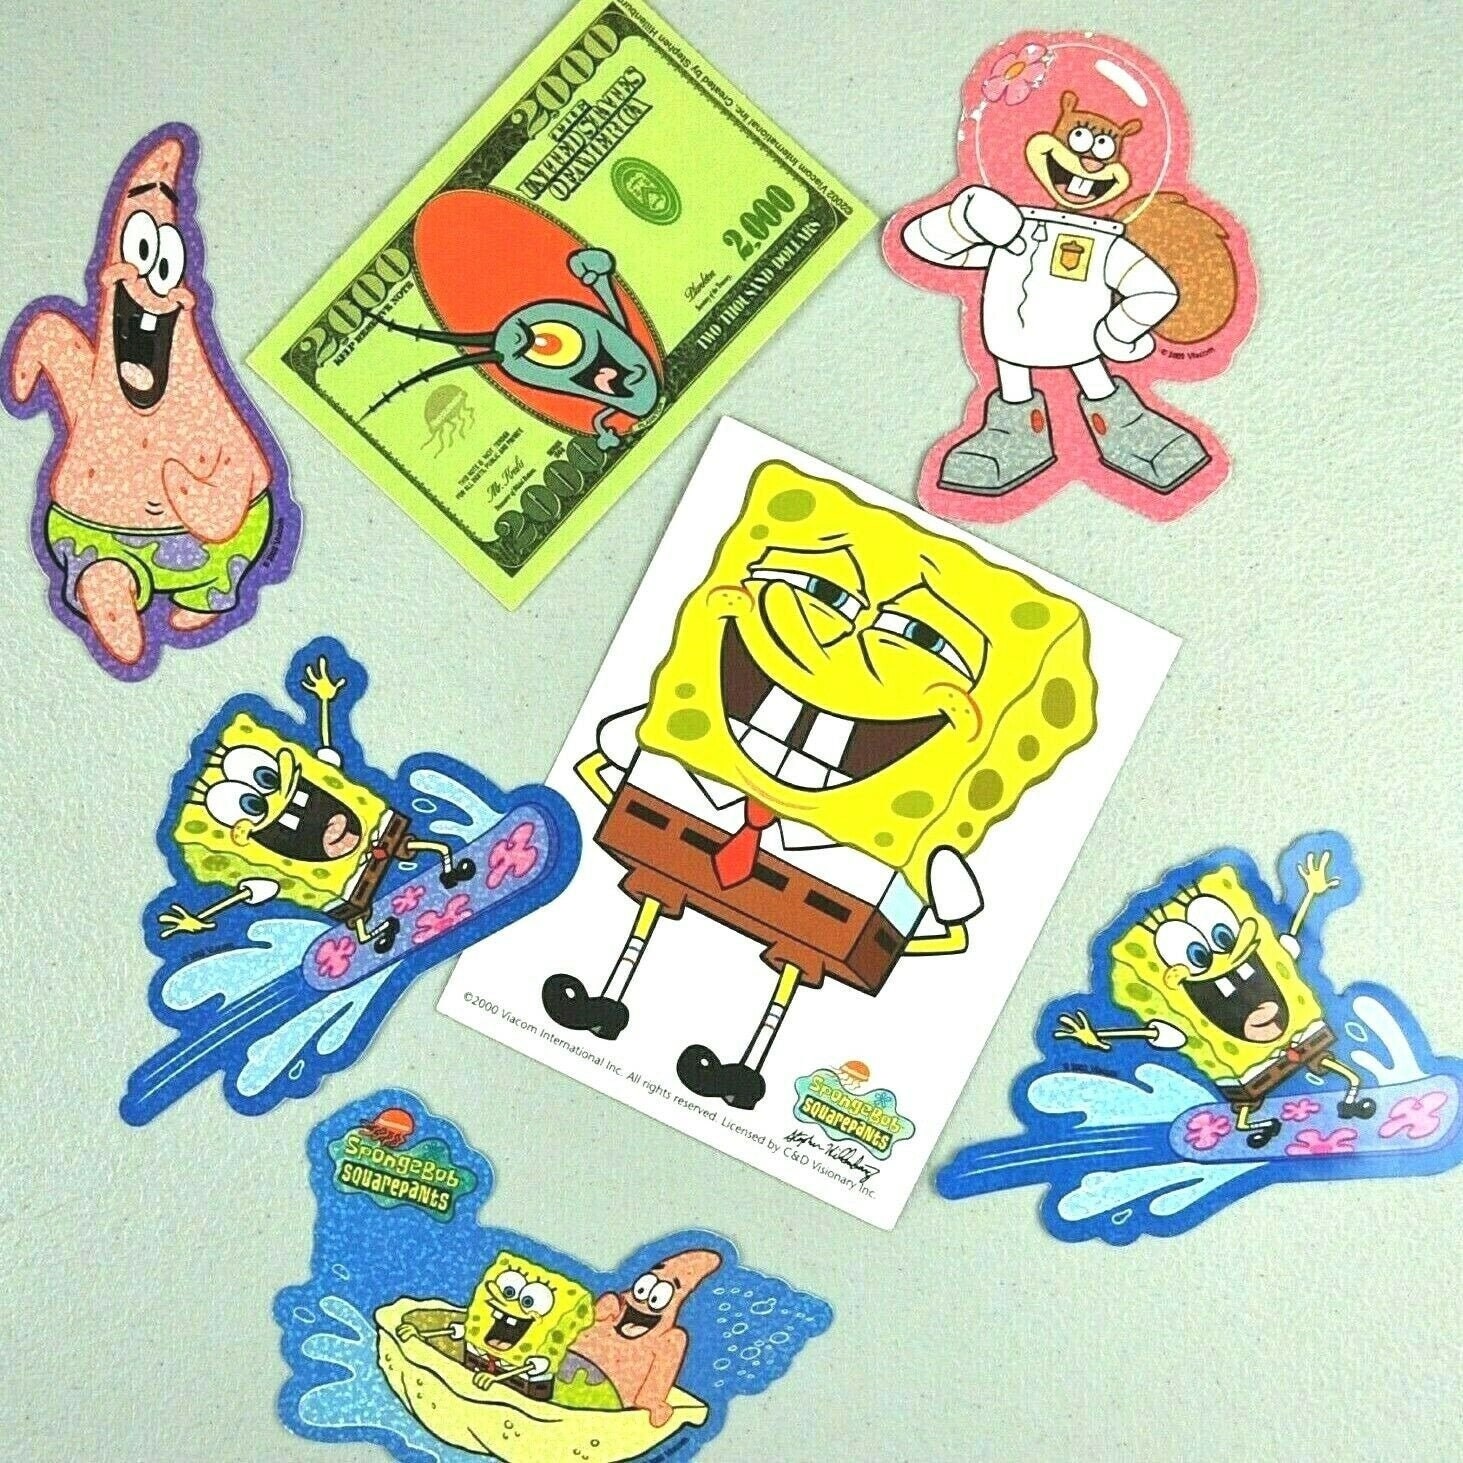 spongebob and sandy and patrick